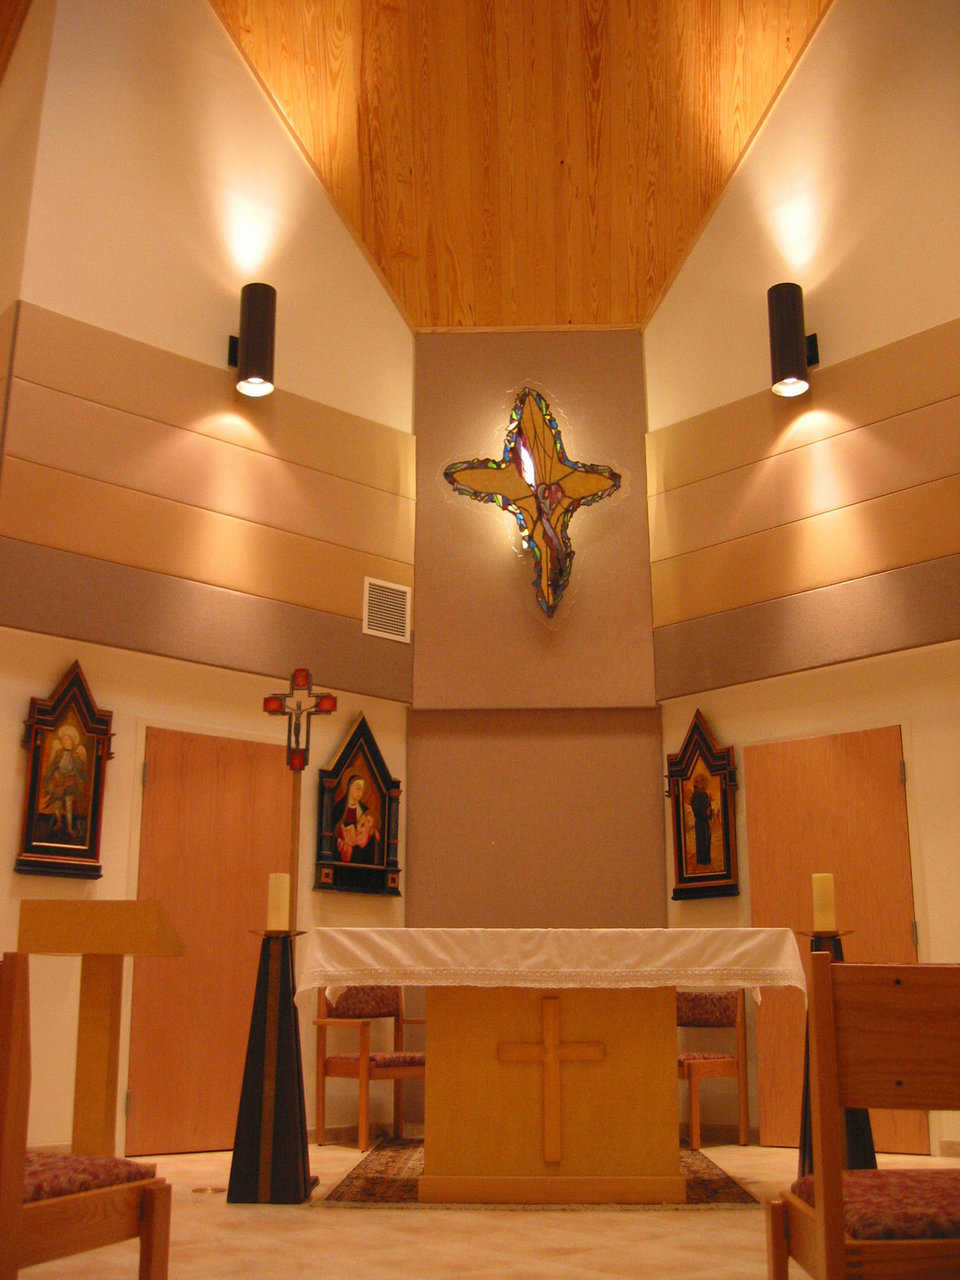 Chapel — Religious art, wood and ceramic tile enhance the school chapel.